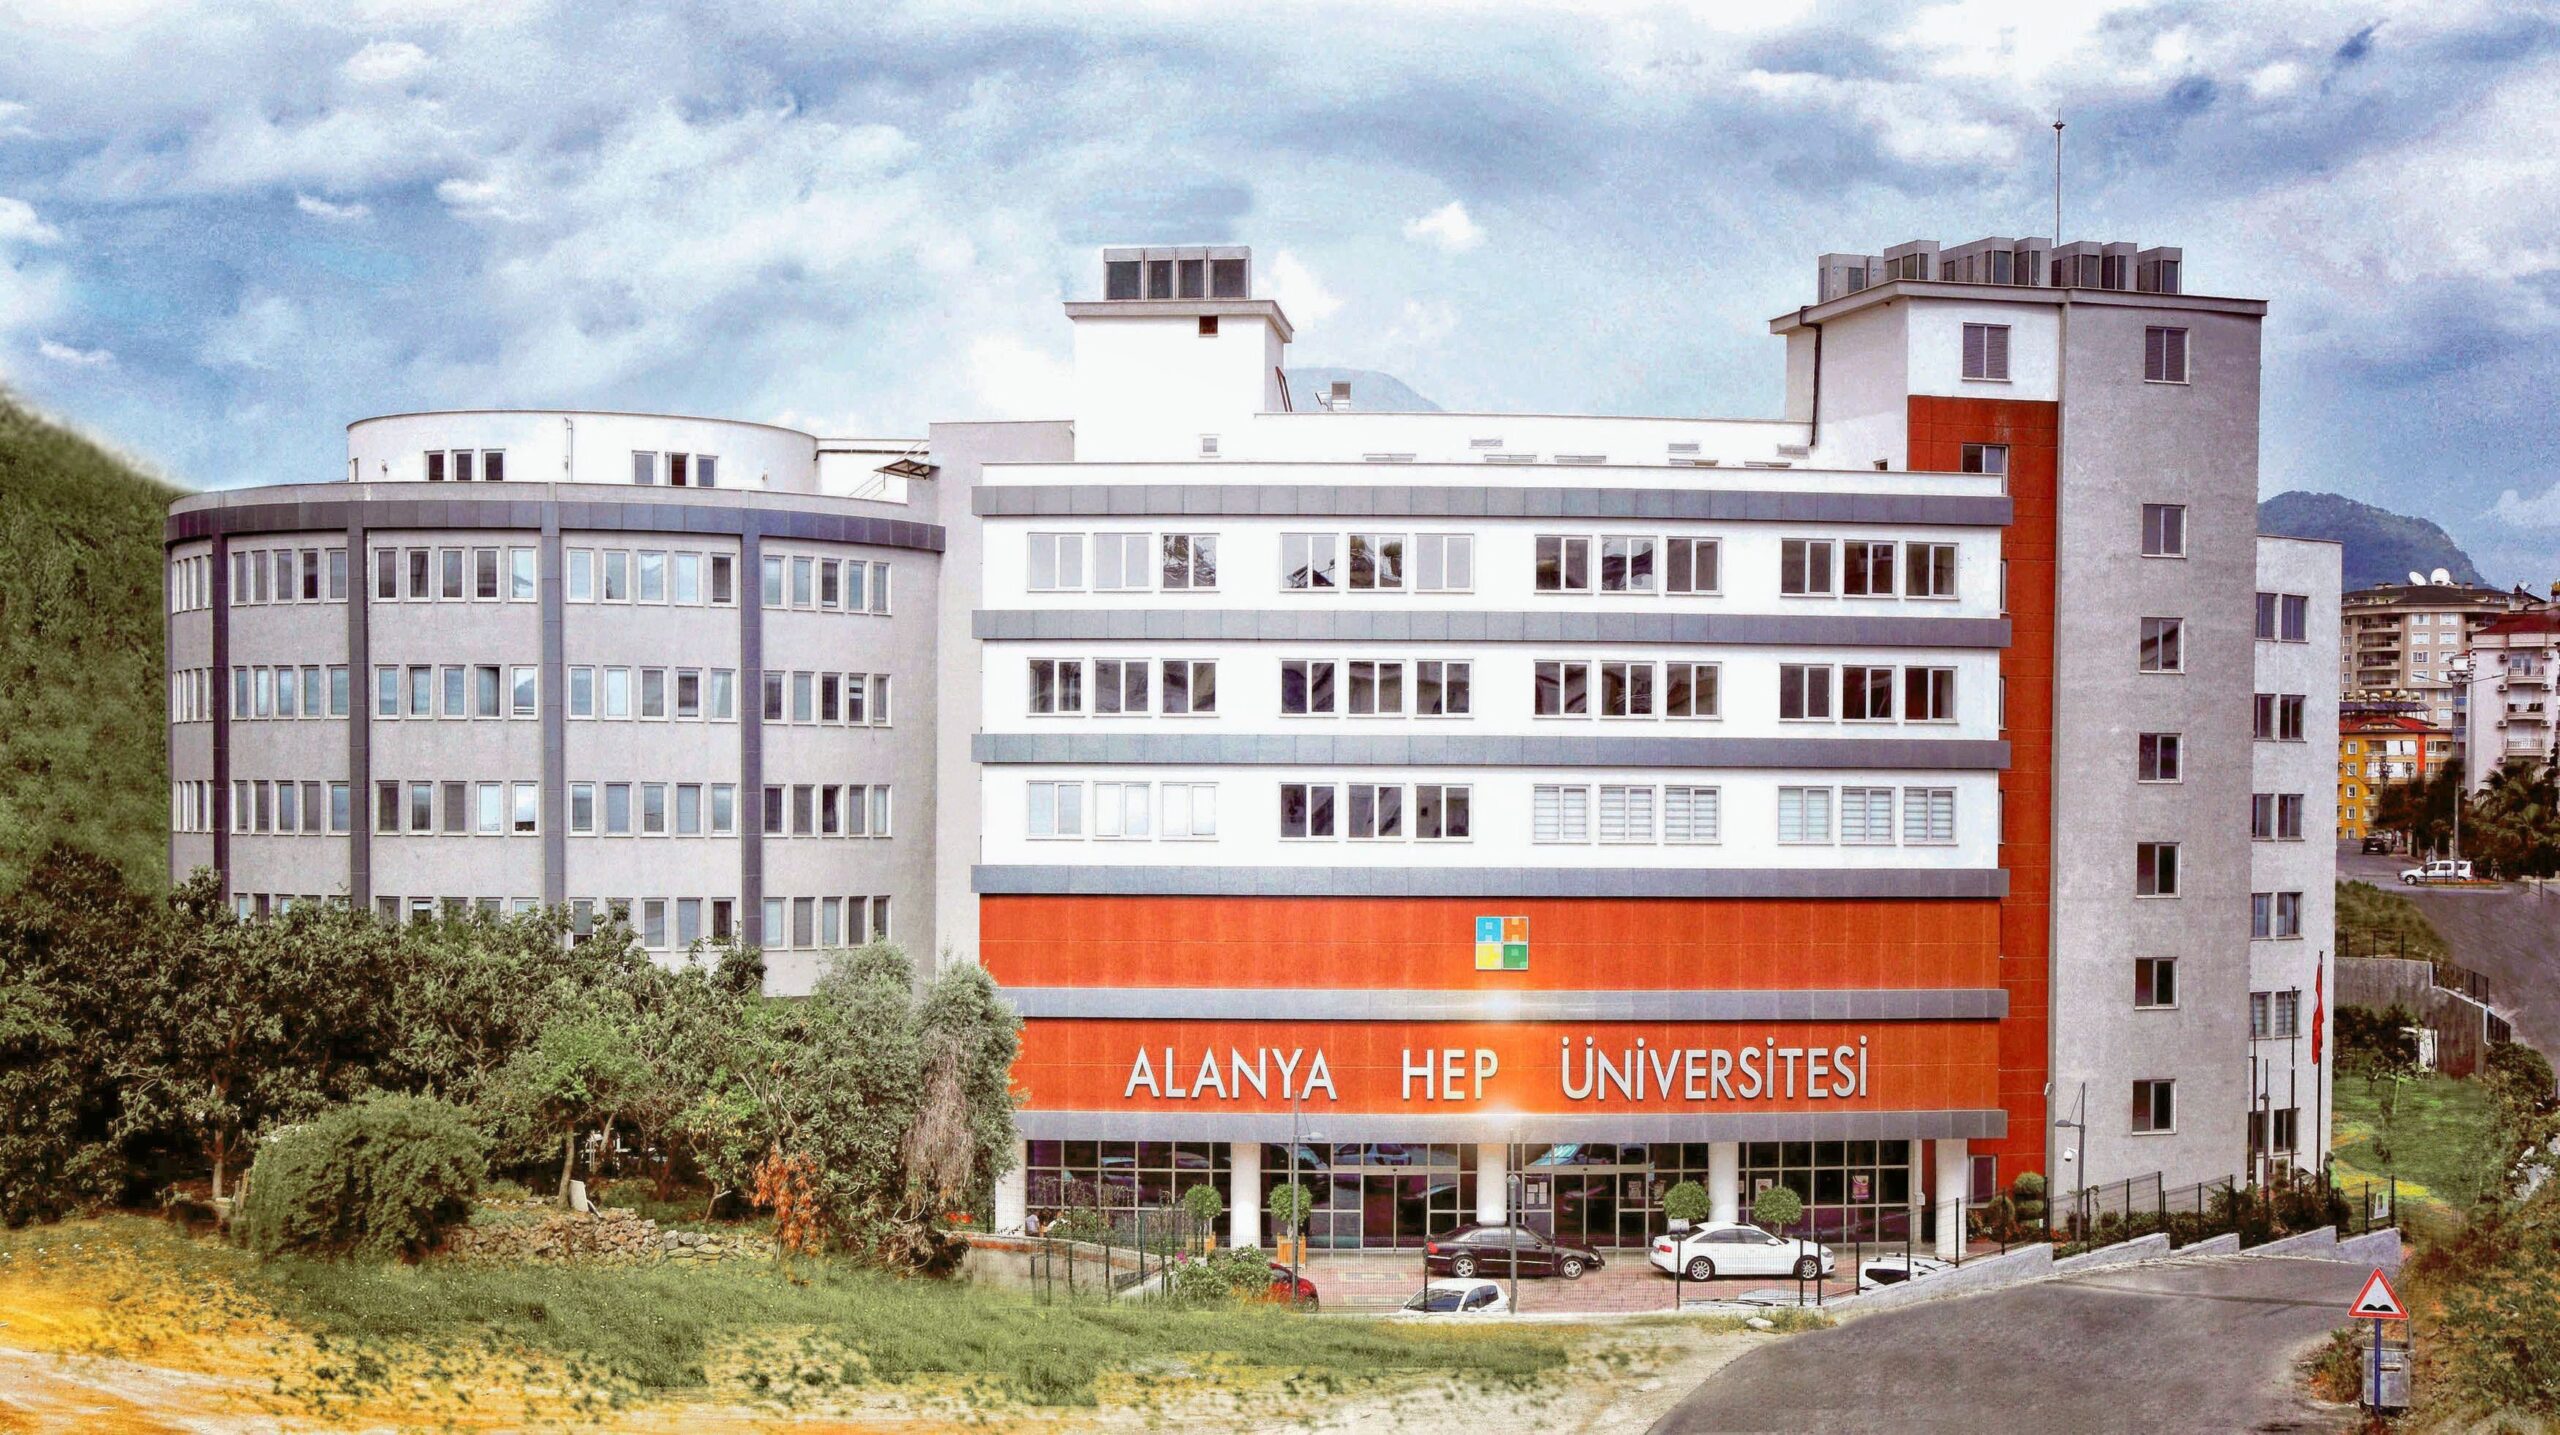 alanya universitesi find and study 3 scaled - Alanya University